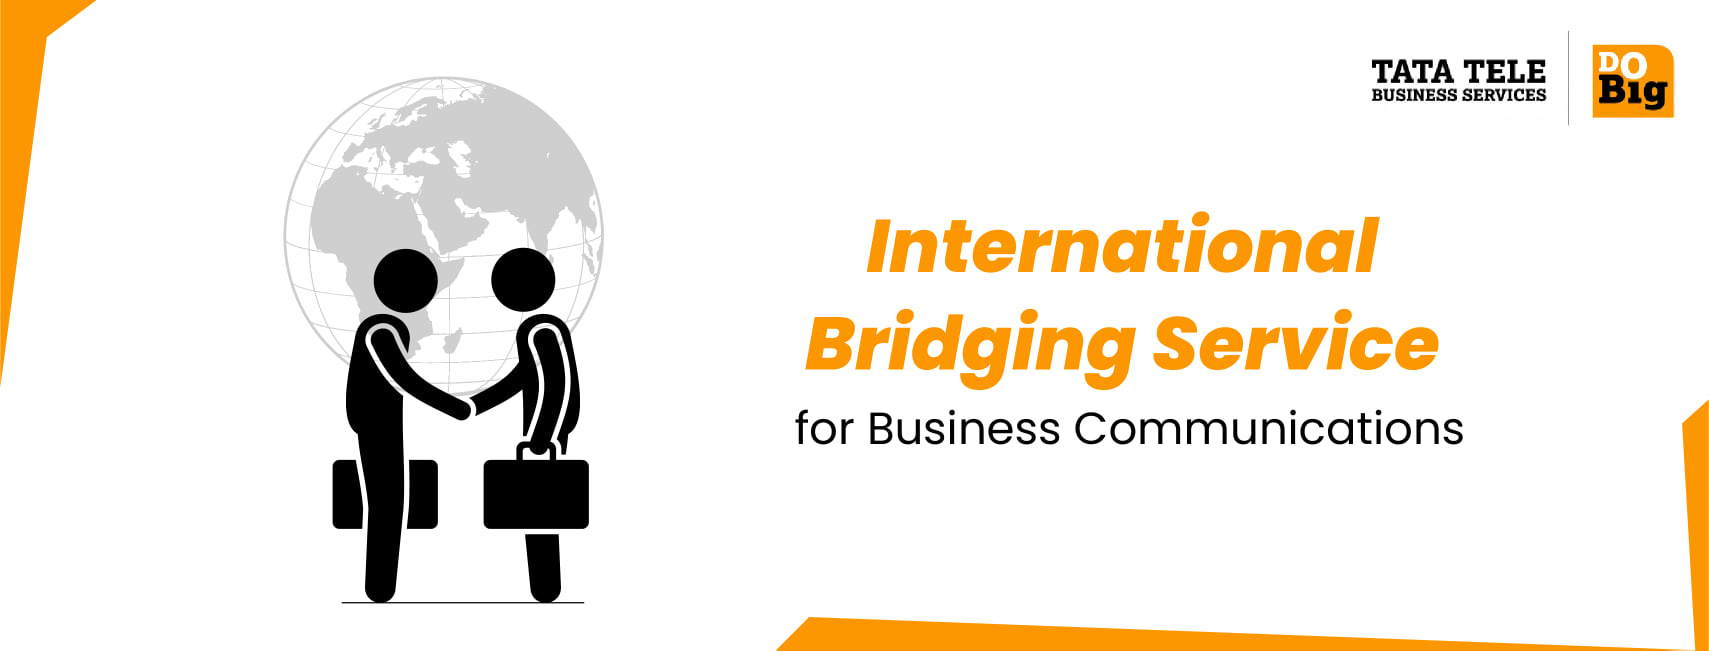 International Bridging Service